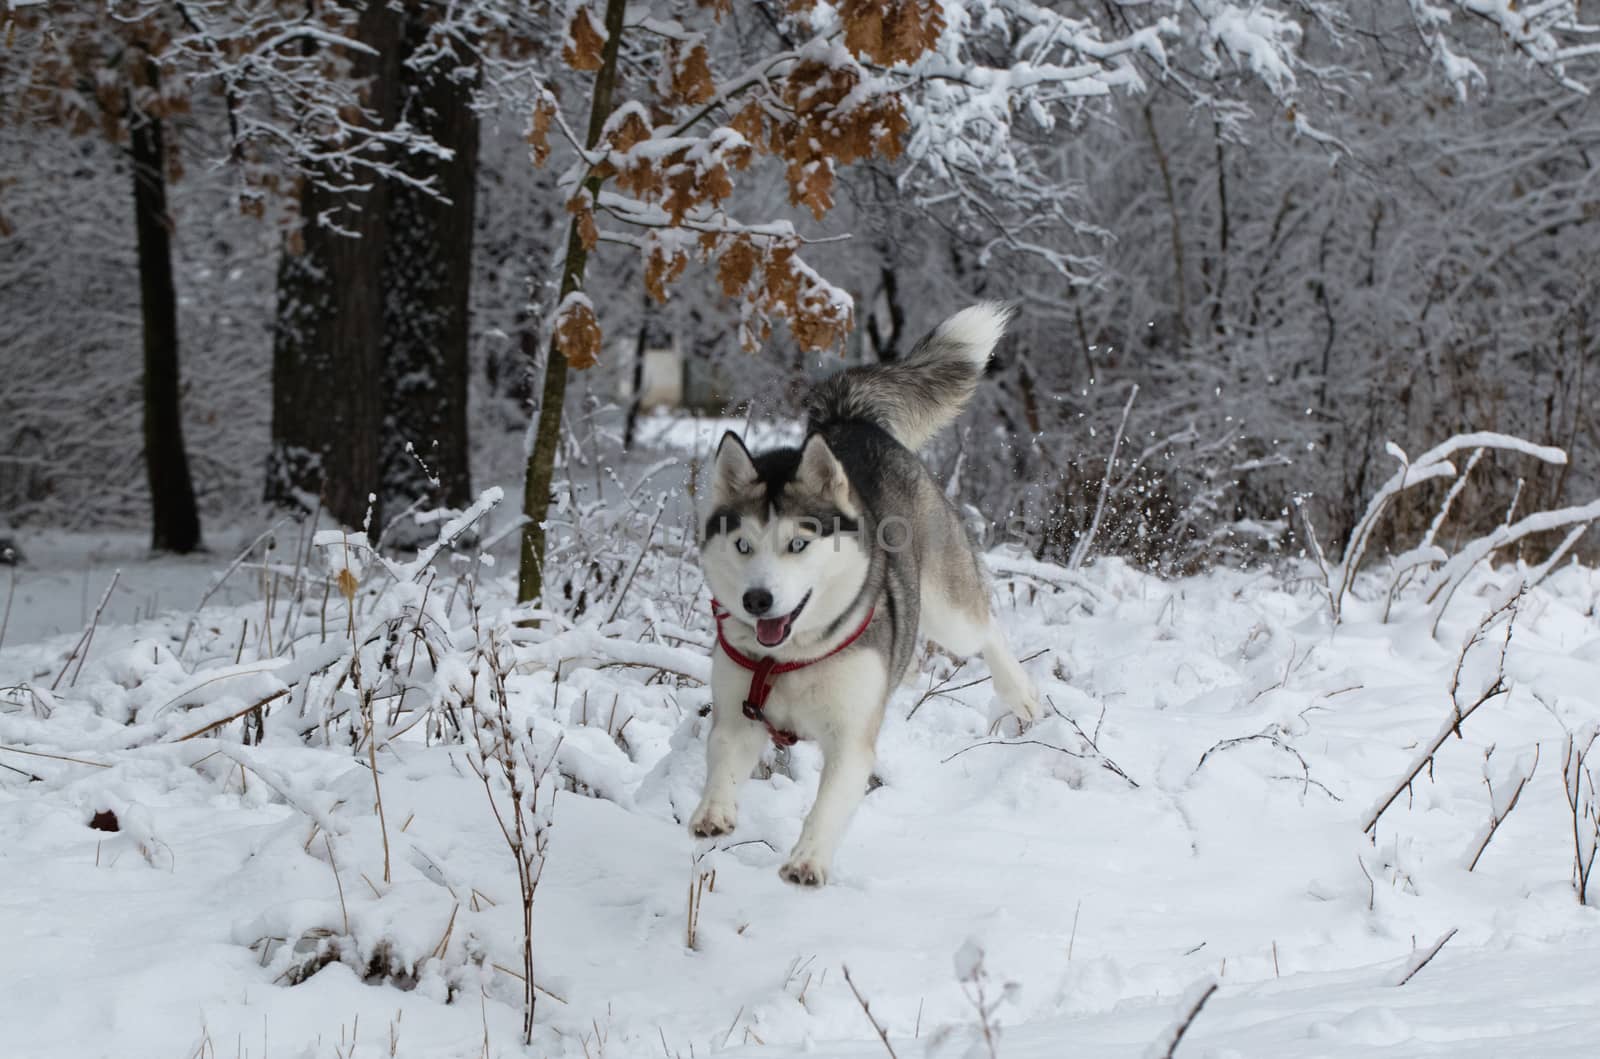 Siberian Husky frolics in the fresh snow.